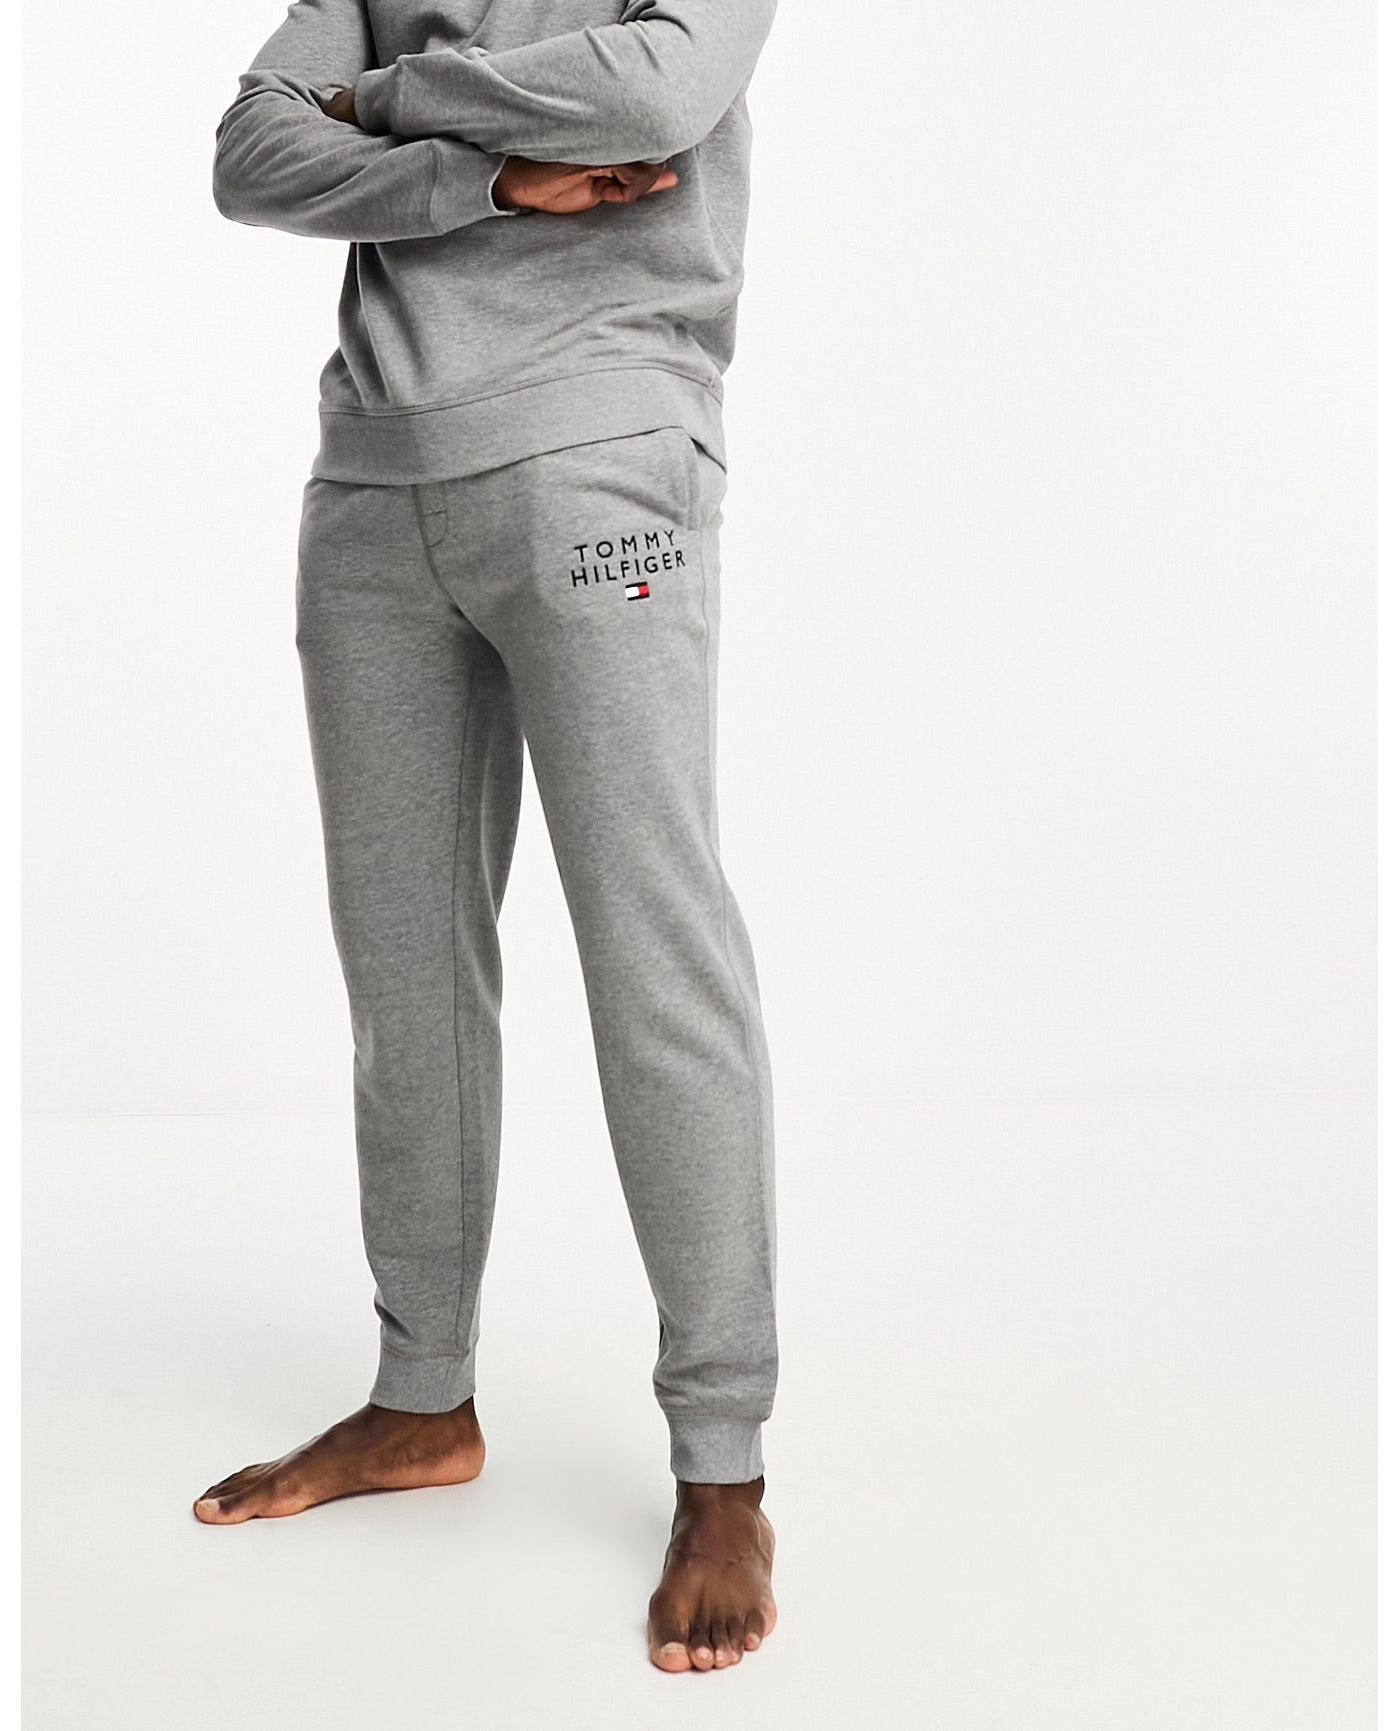 Tommy Hilfiger Original pyjama trousers in grey